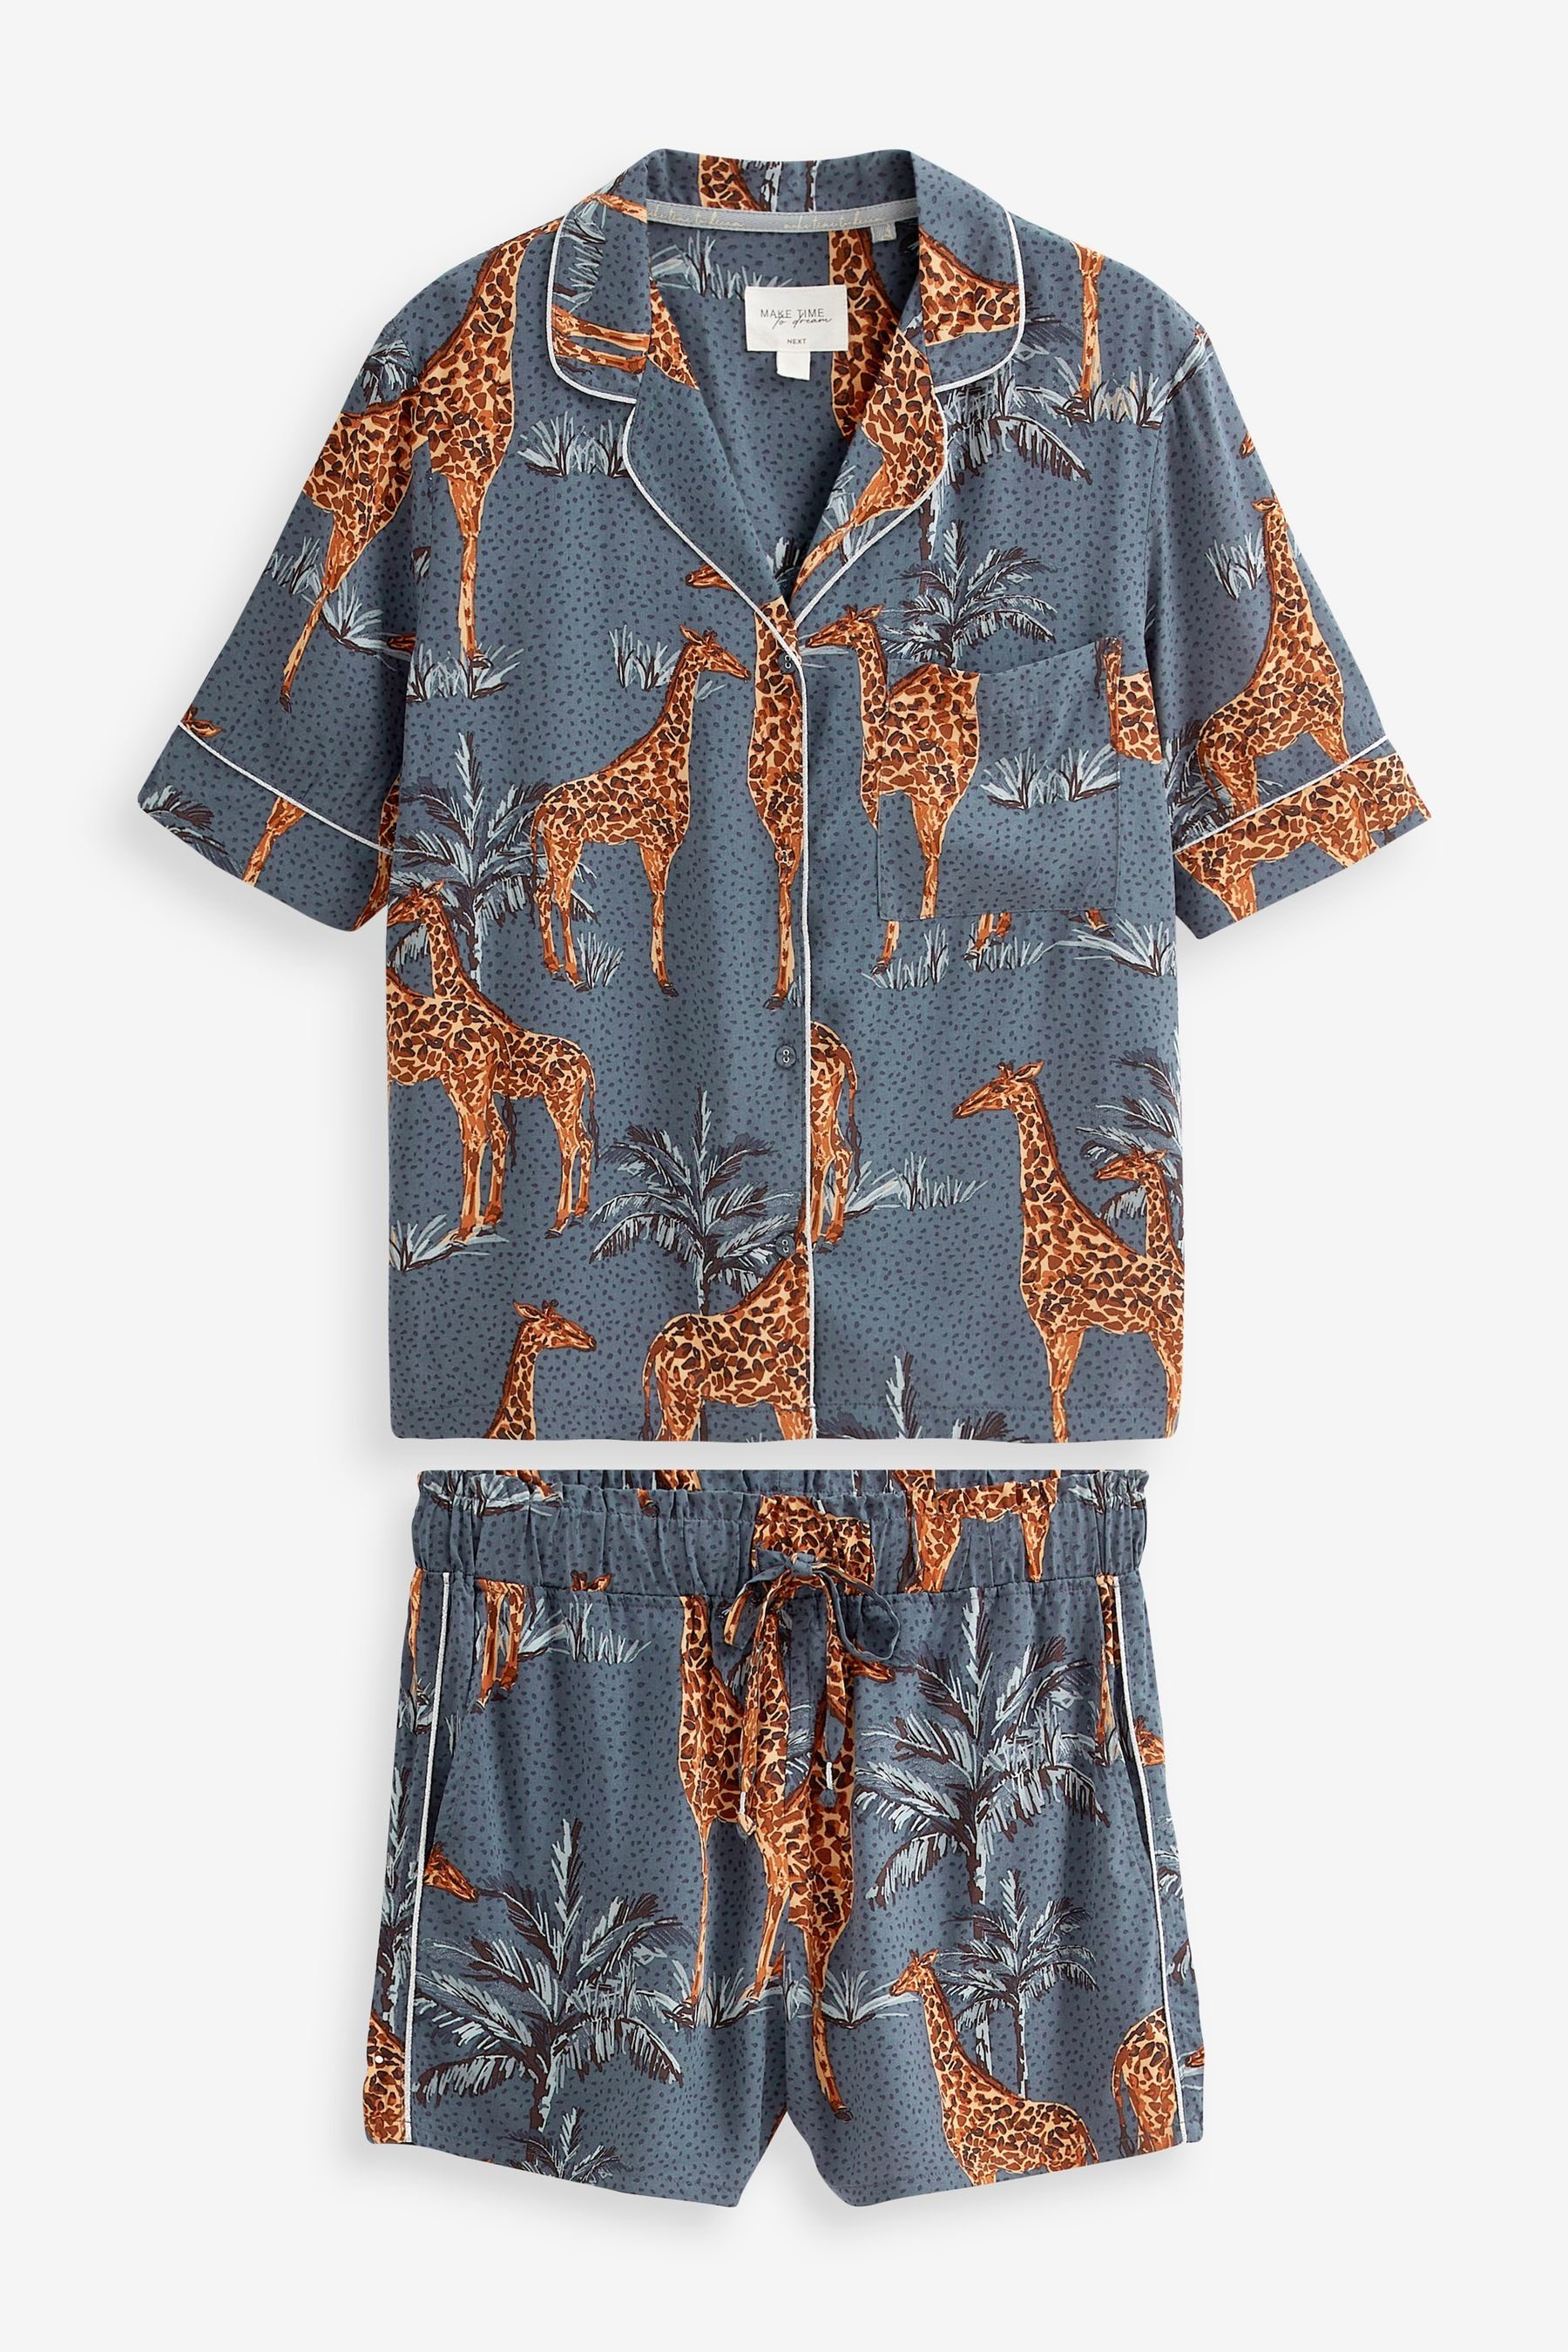 Next Pyjama Kurzärmliges Pyjamaset mit Knopfleiste (2 tlg) Blue Giraffe